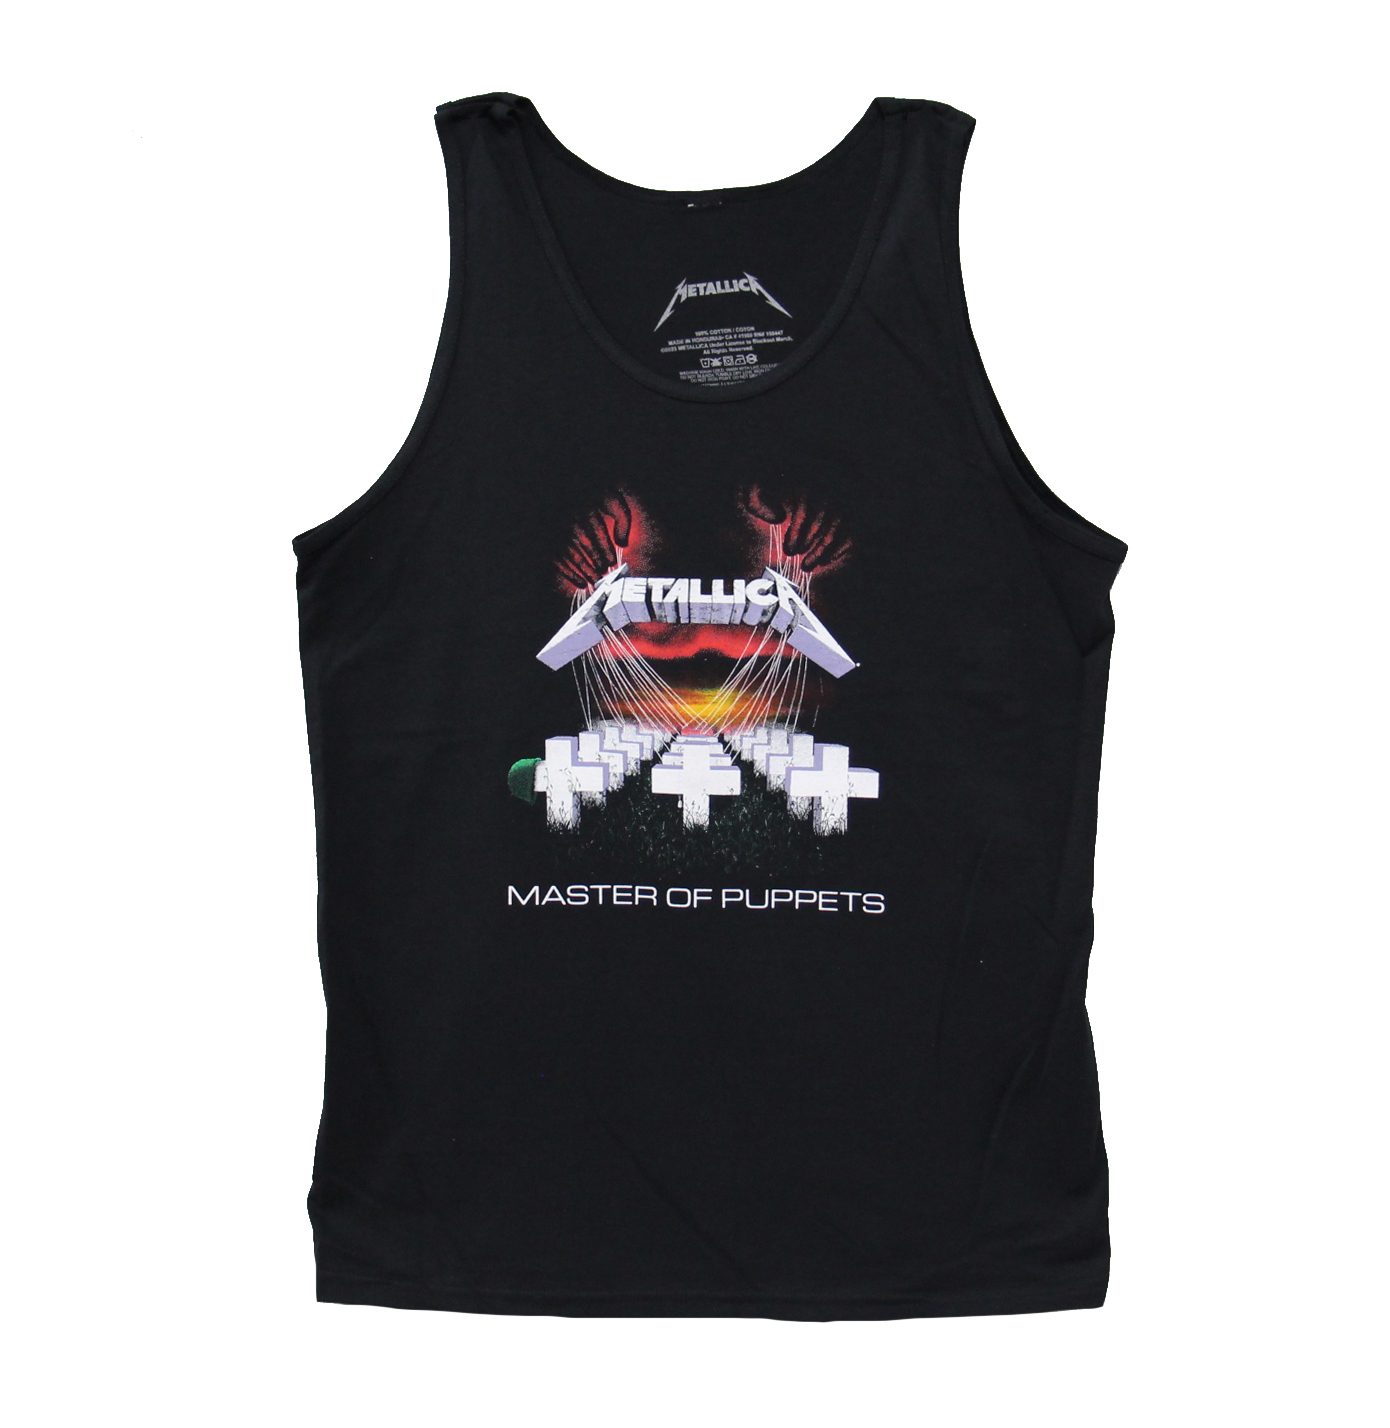 Bad Brains Tank Top, Bad Brains Band Black Tank Top, Heavy Metal  Merchandise – Metal Band T-Shirt